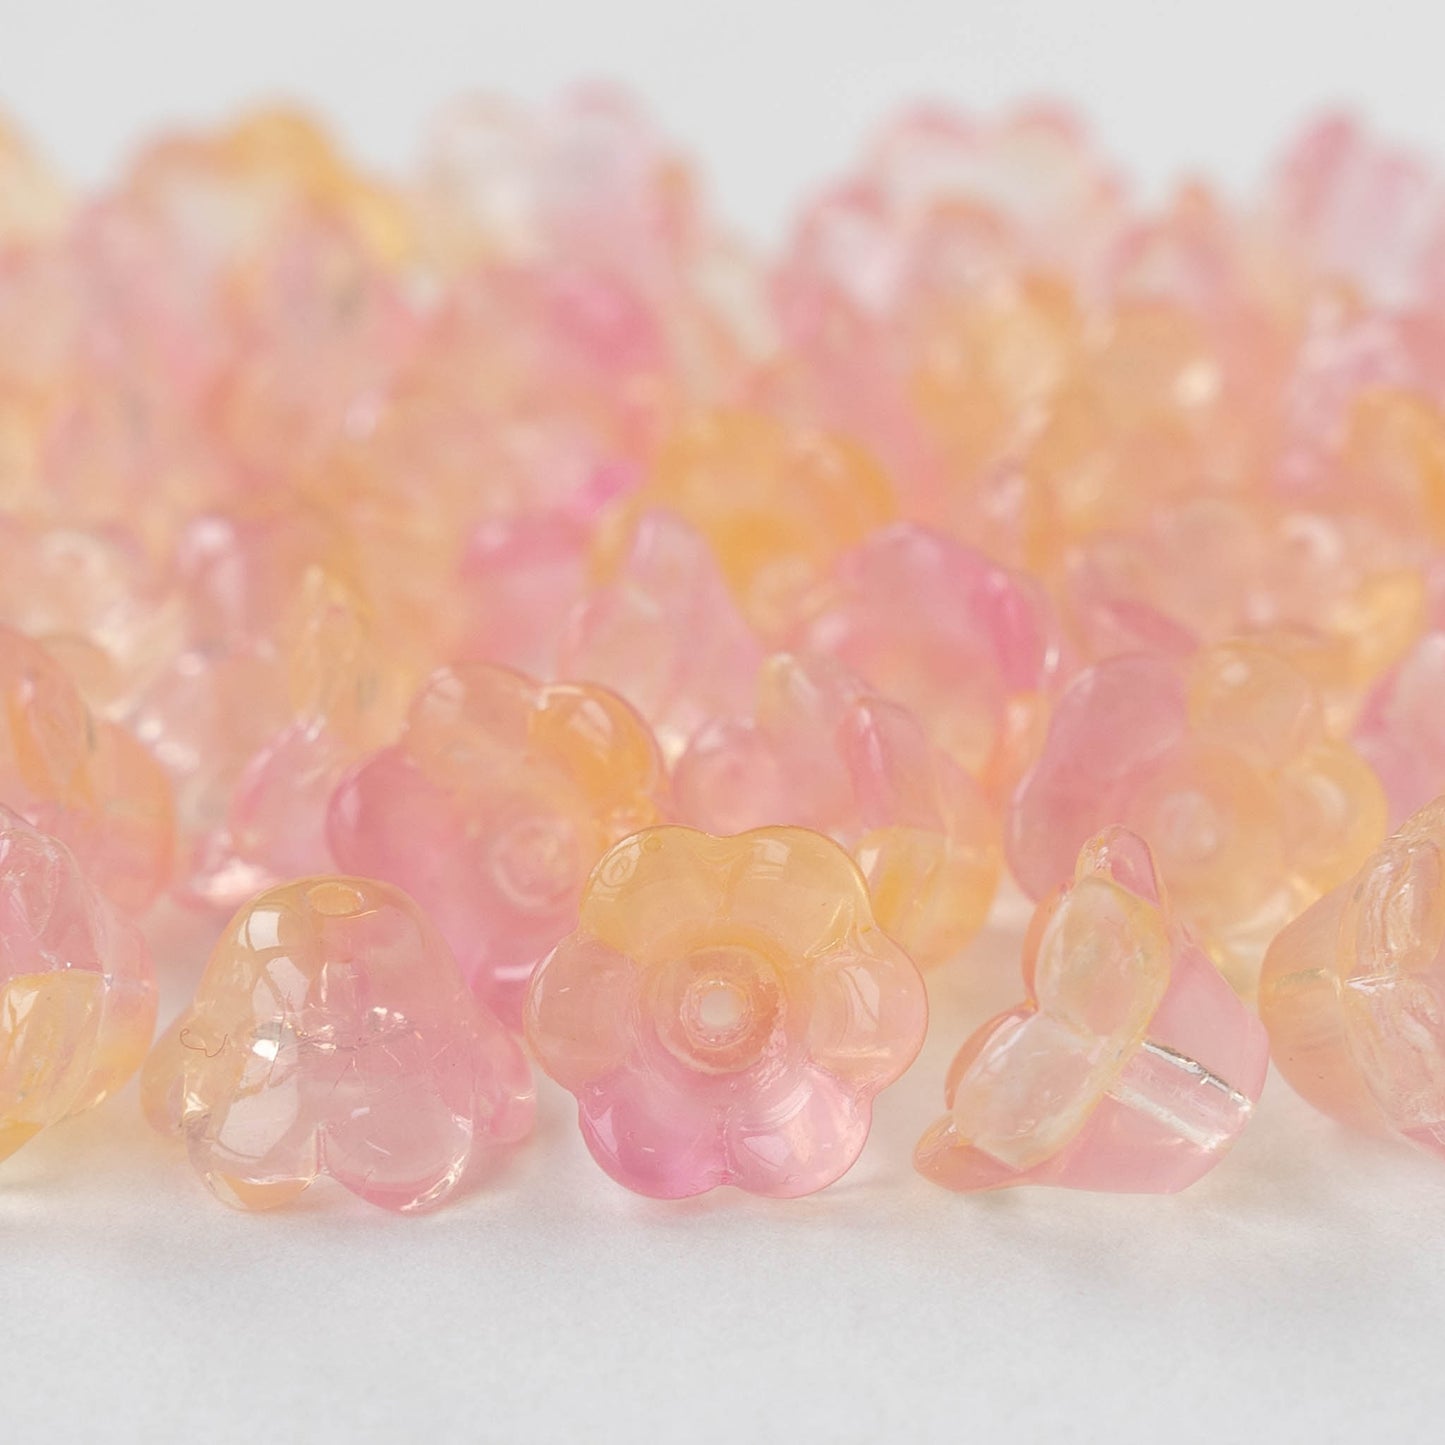 7x12mm Flower Beads - Orange Pink Opaline Mix - 30 Beads